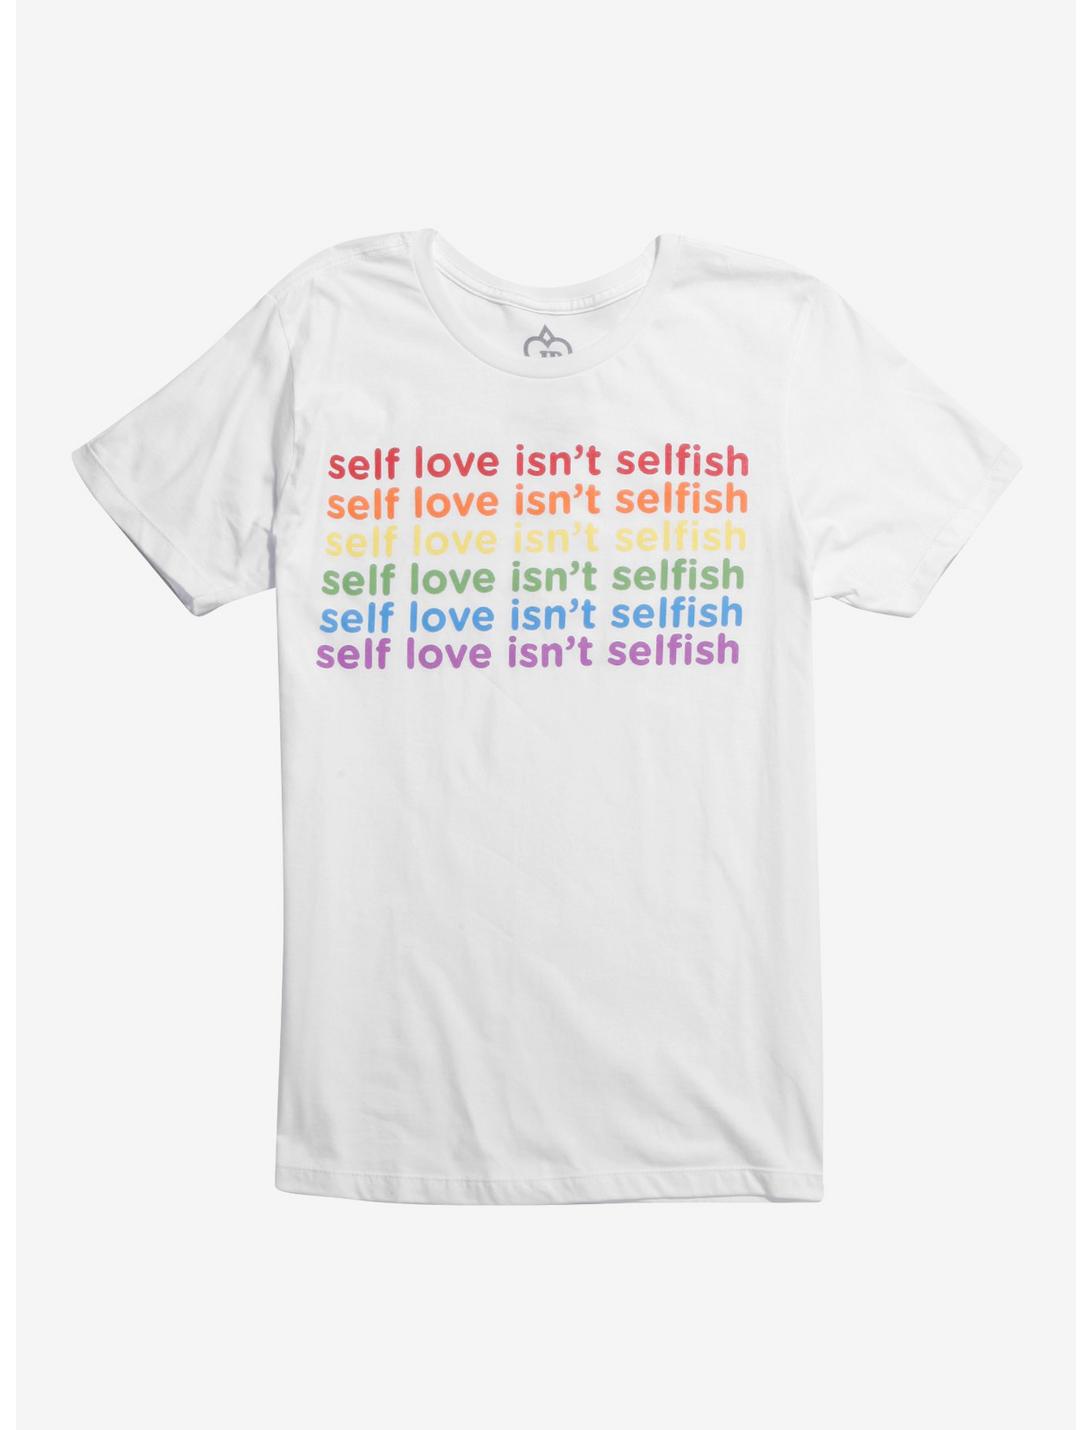 Jessie Paege Self Love Isn't Selfish T-Shirt Hot Topic Exclusive, MULTI, hi-res